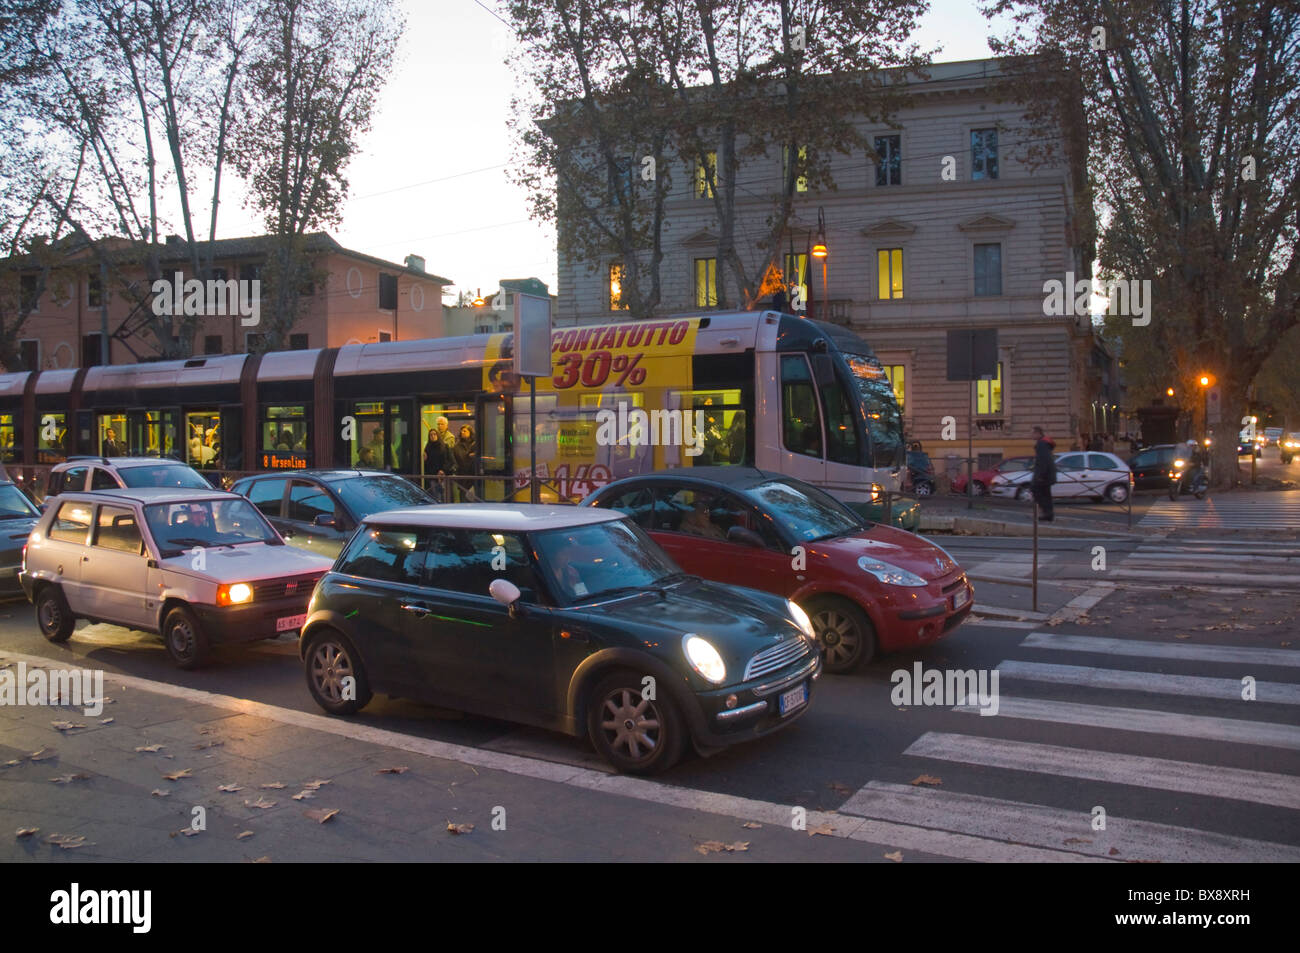 Traffic stopped at light Viale di Trastevere street Trastevere district Rome Italy Europe Stock Photo